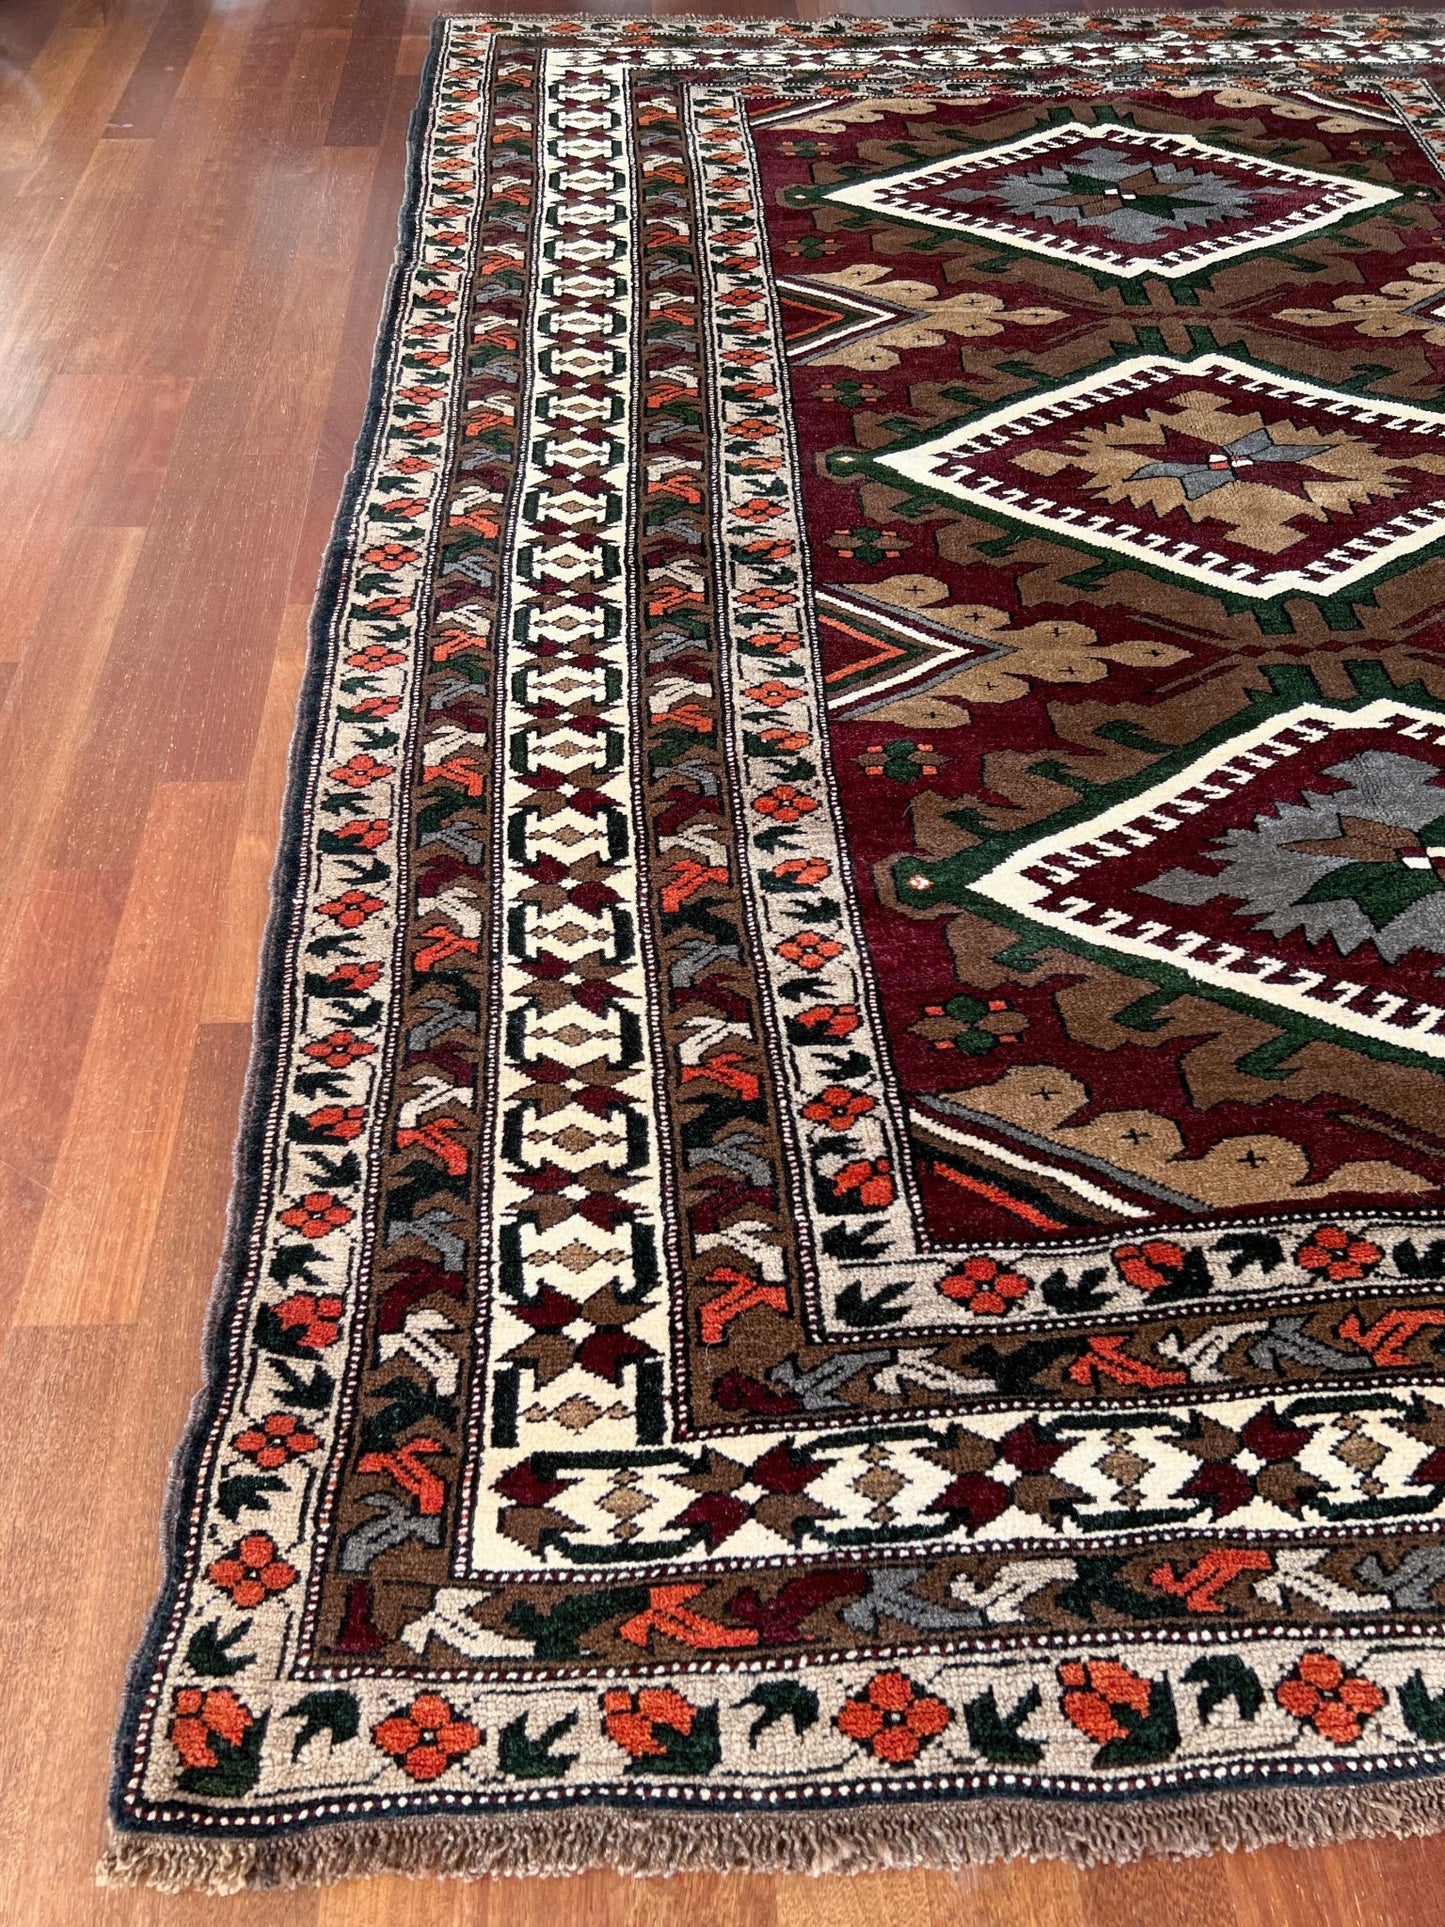 kars turkish rug shop palo alto oriental rug san francisco bay area buy vintage rug berkeley online rug shopping